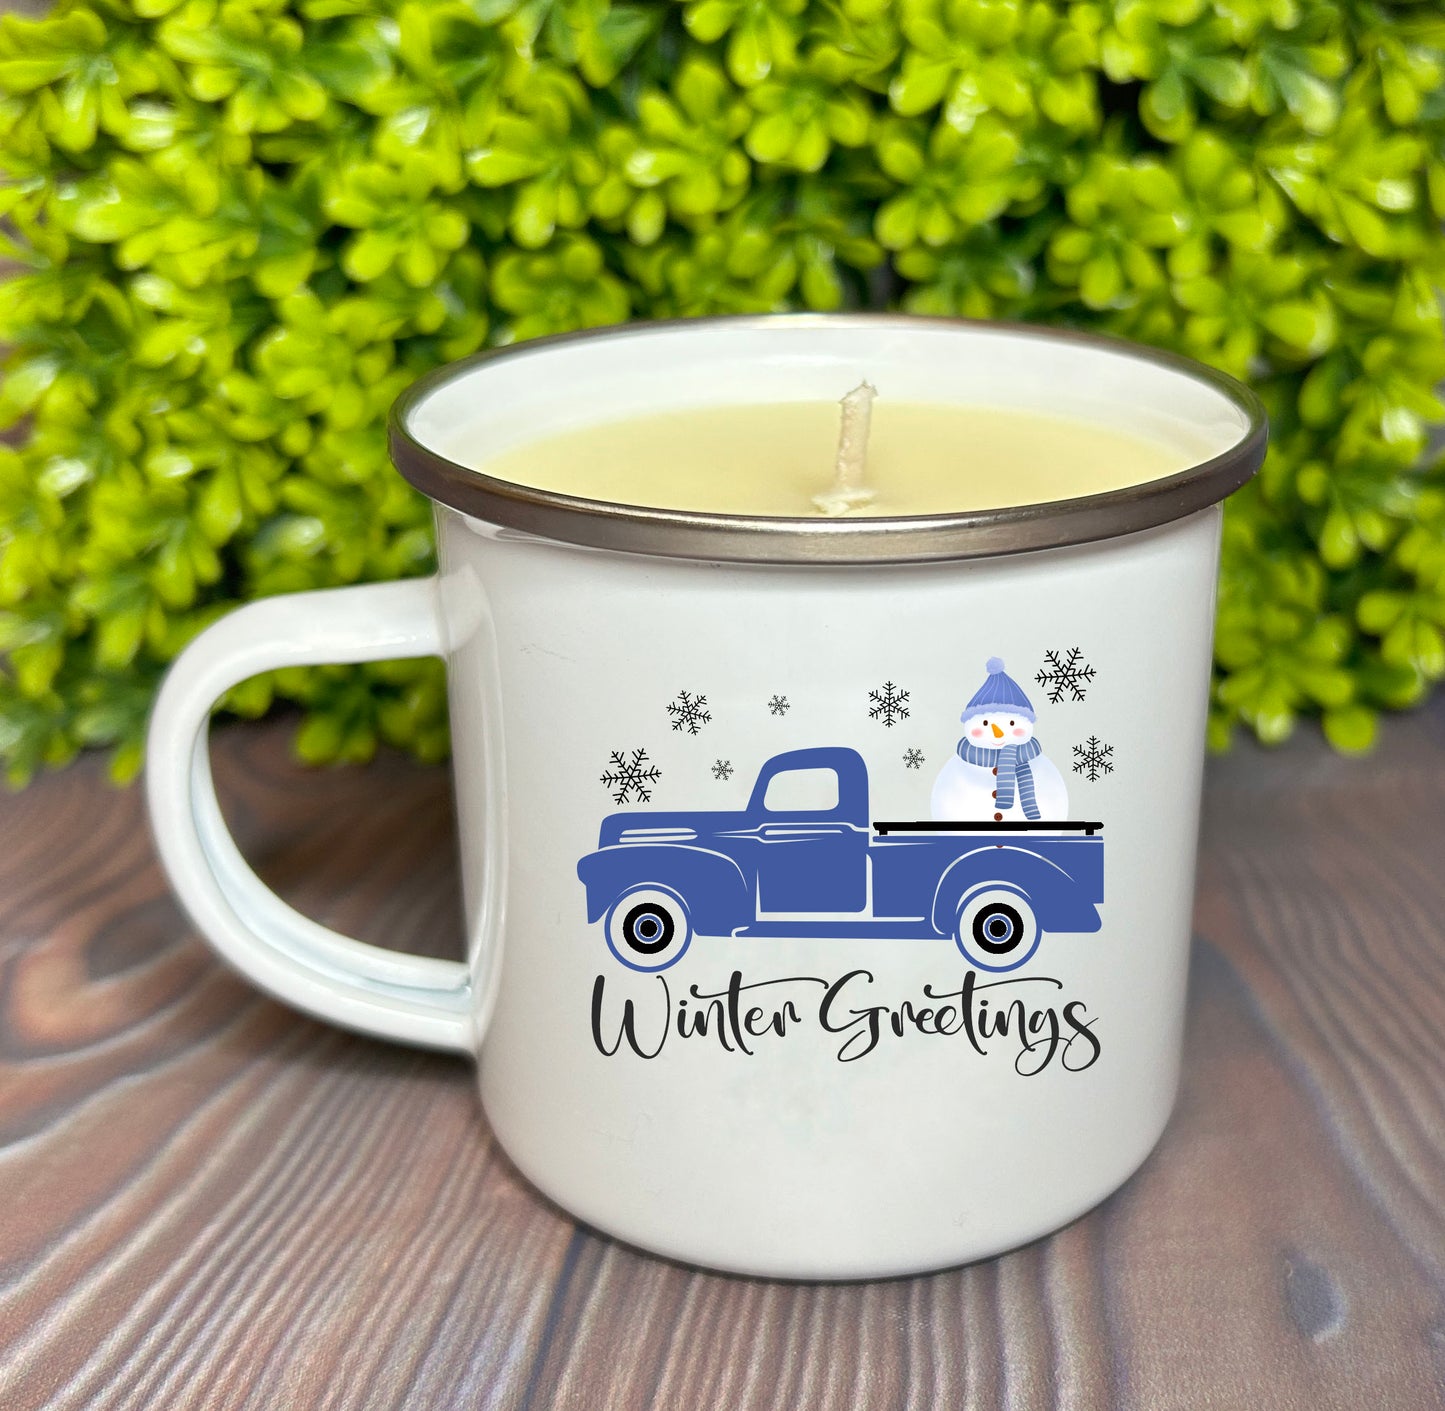 Winter Greetings Enamel Mug Candle